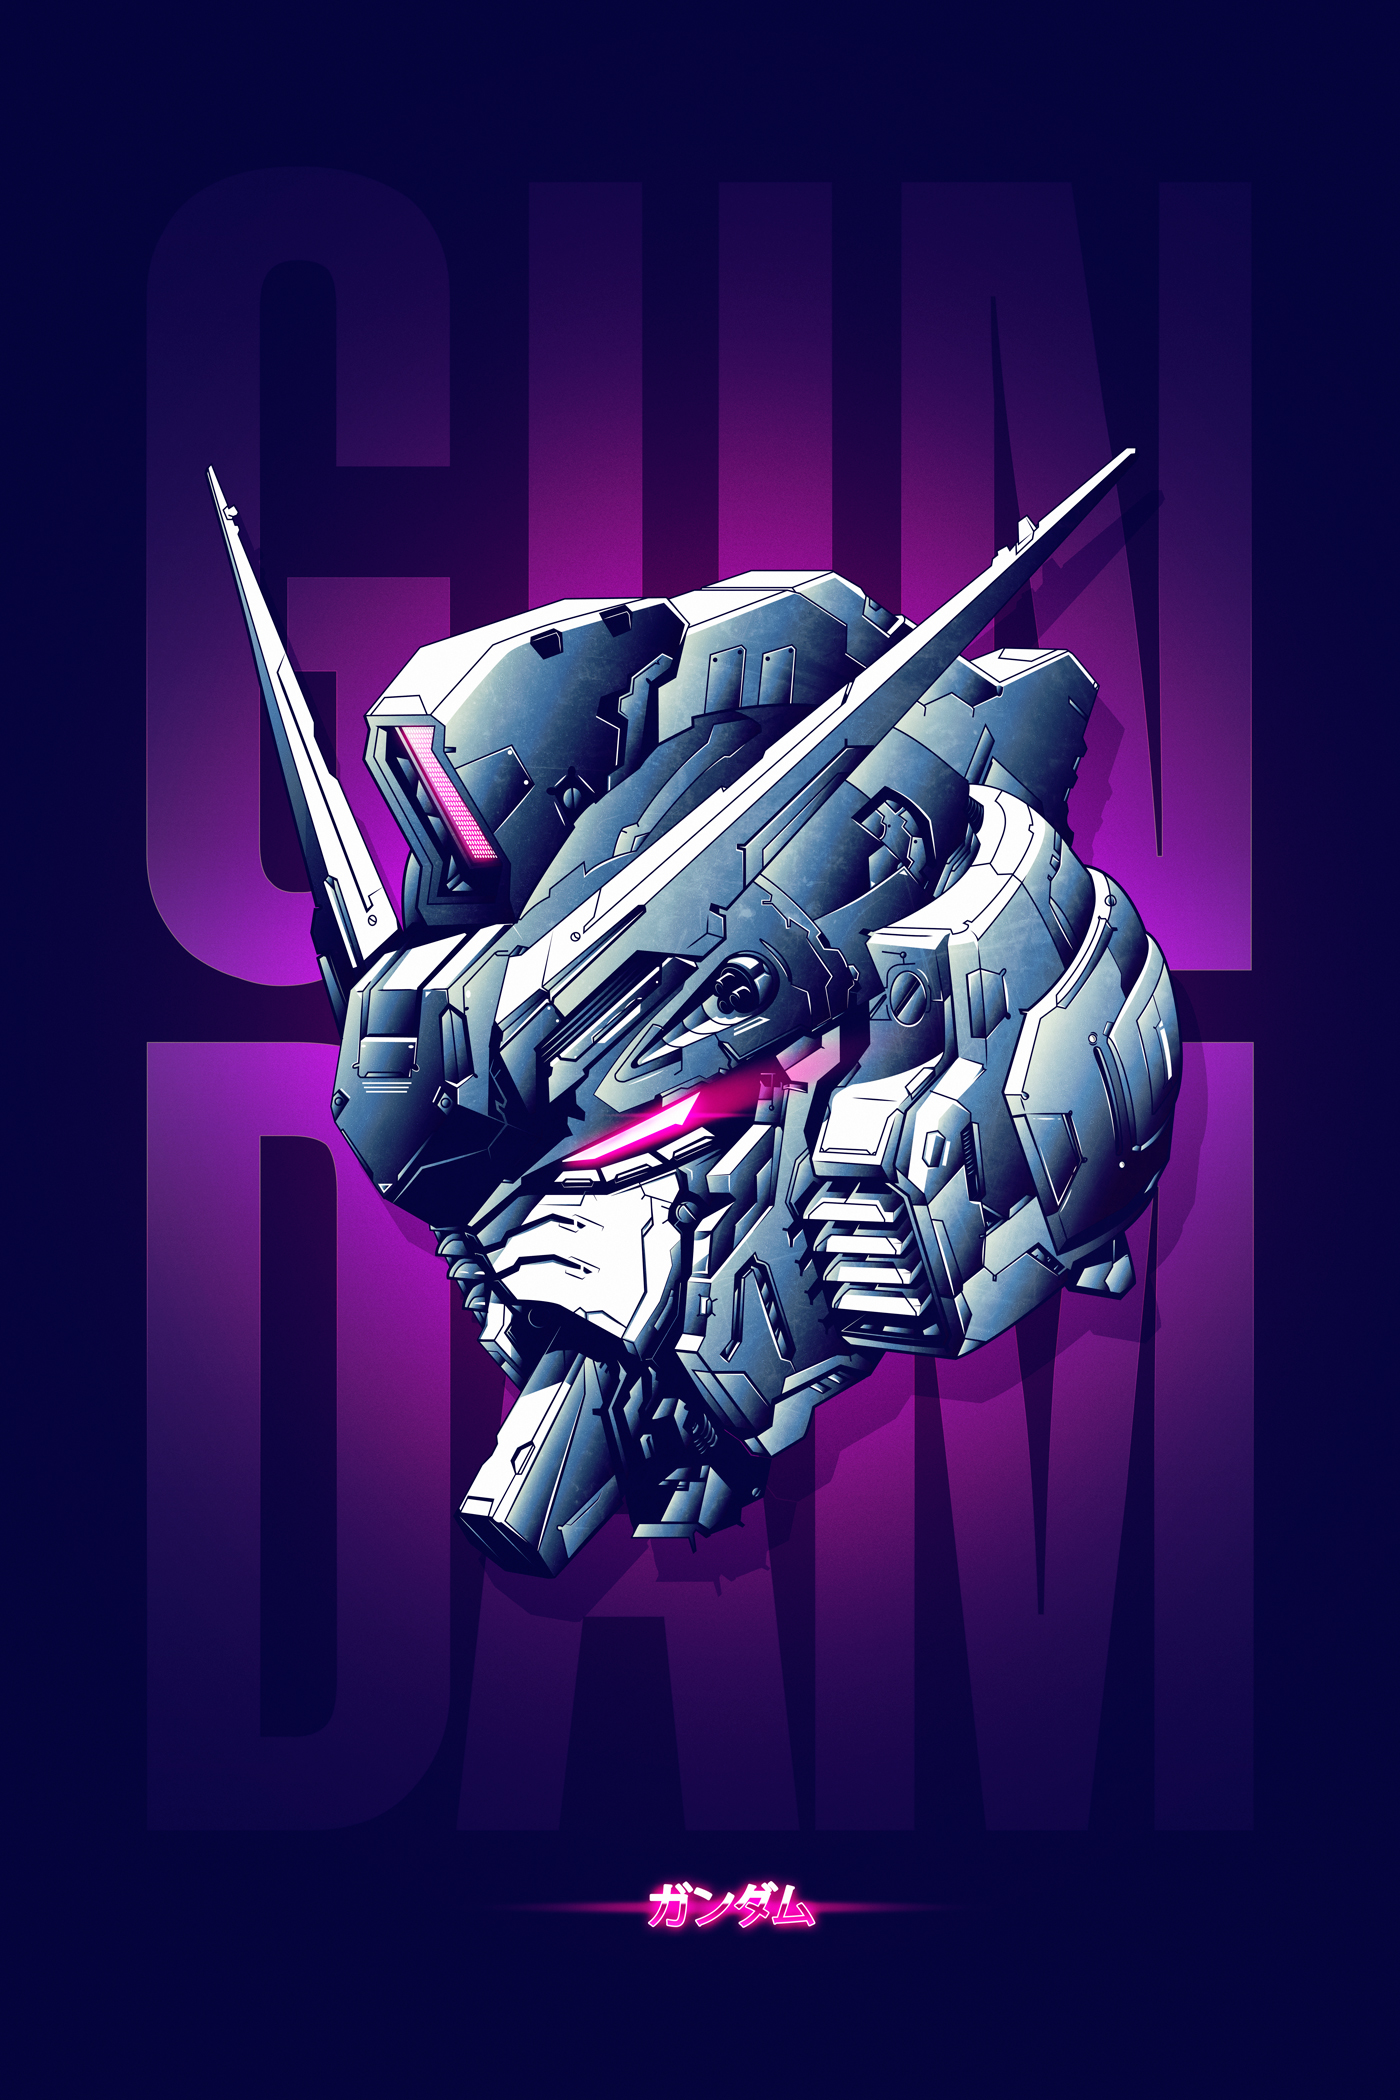 Gundam mobile suit mecha robot mech 08th ms ground type Armor knight vector